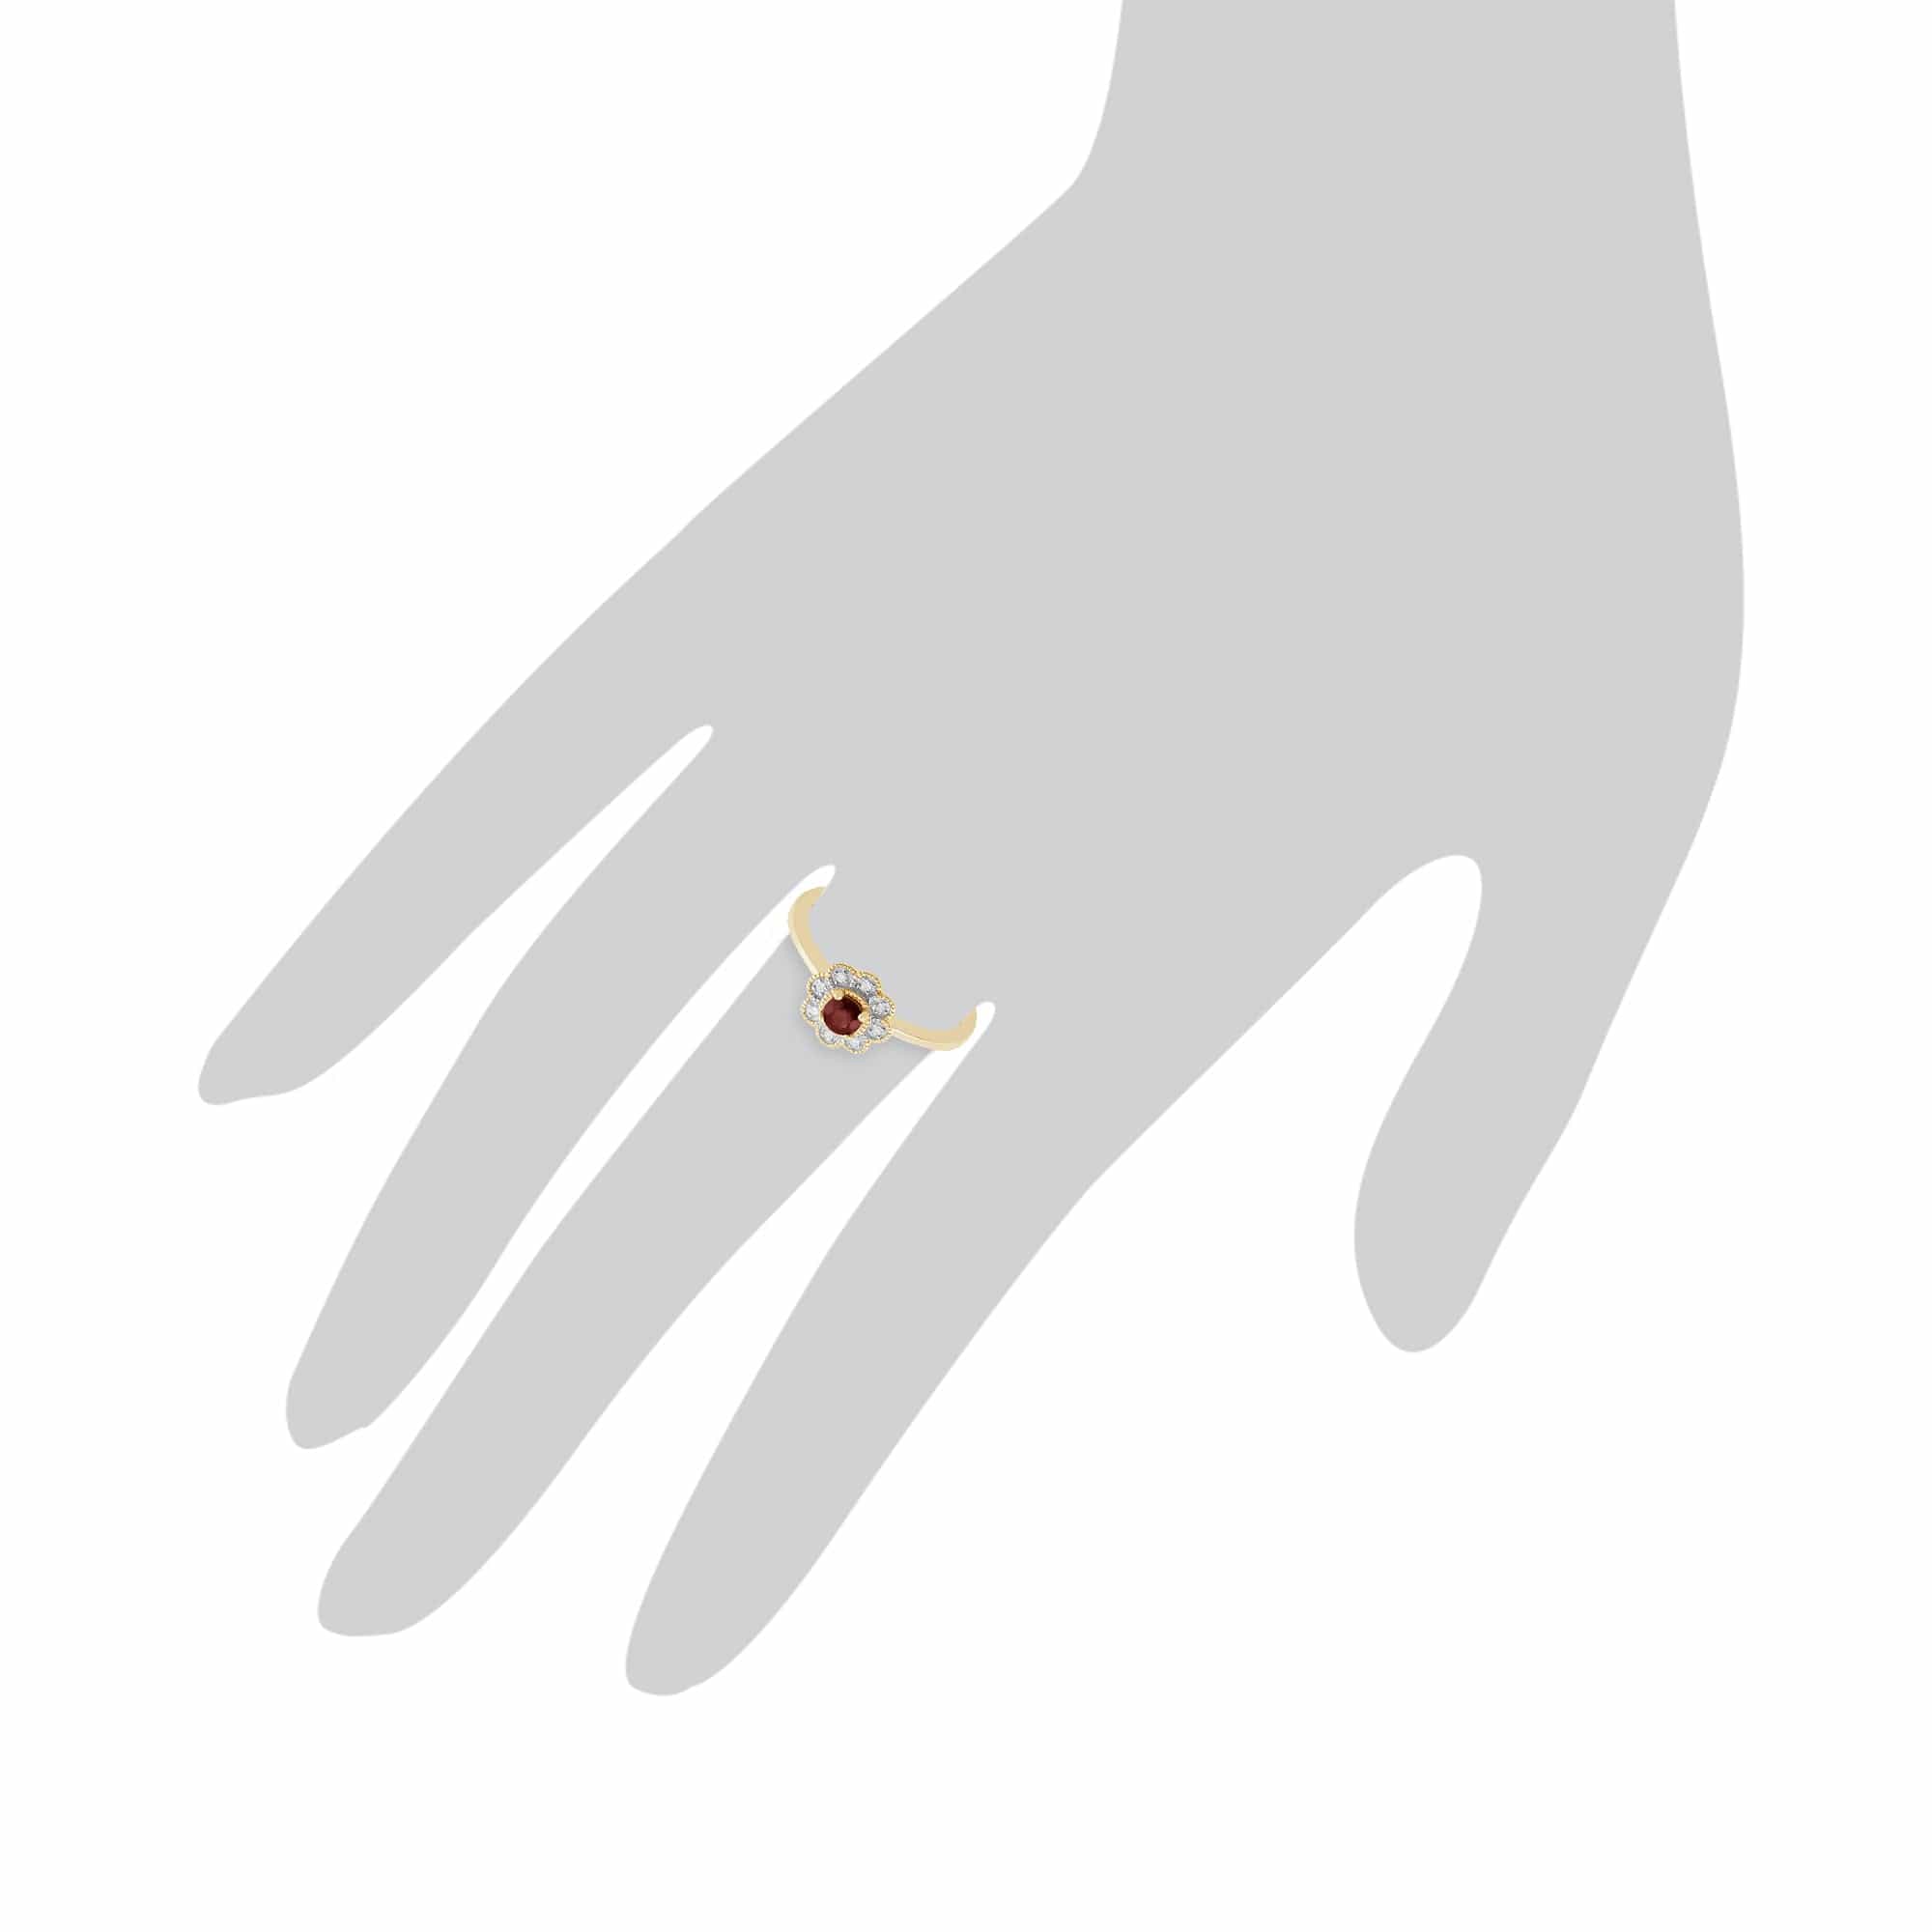 Gemondo 9ct Yellow Gold 0.24ct Ruby & Diamond Floral Ring Image 3